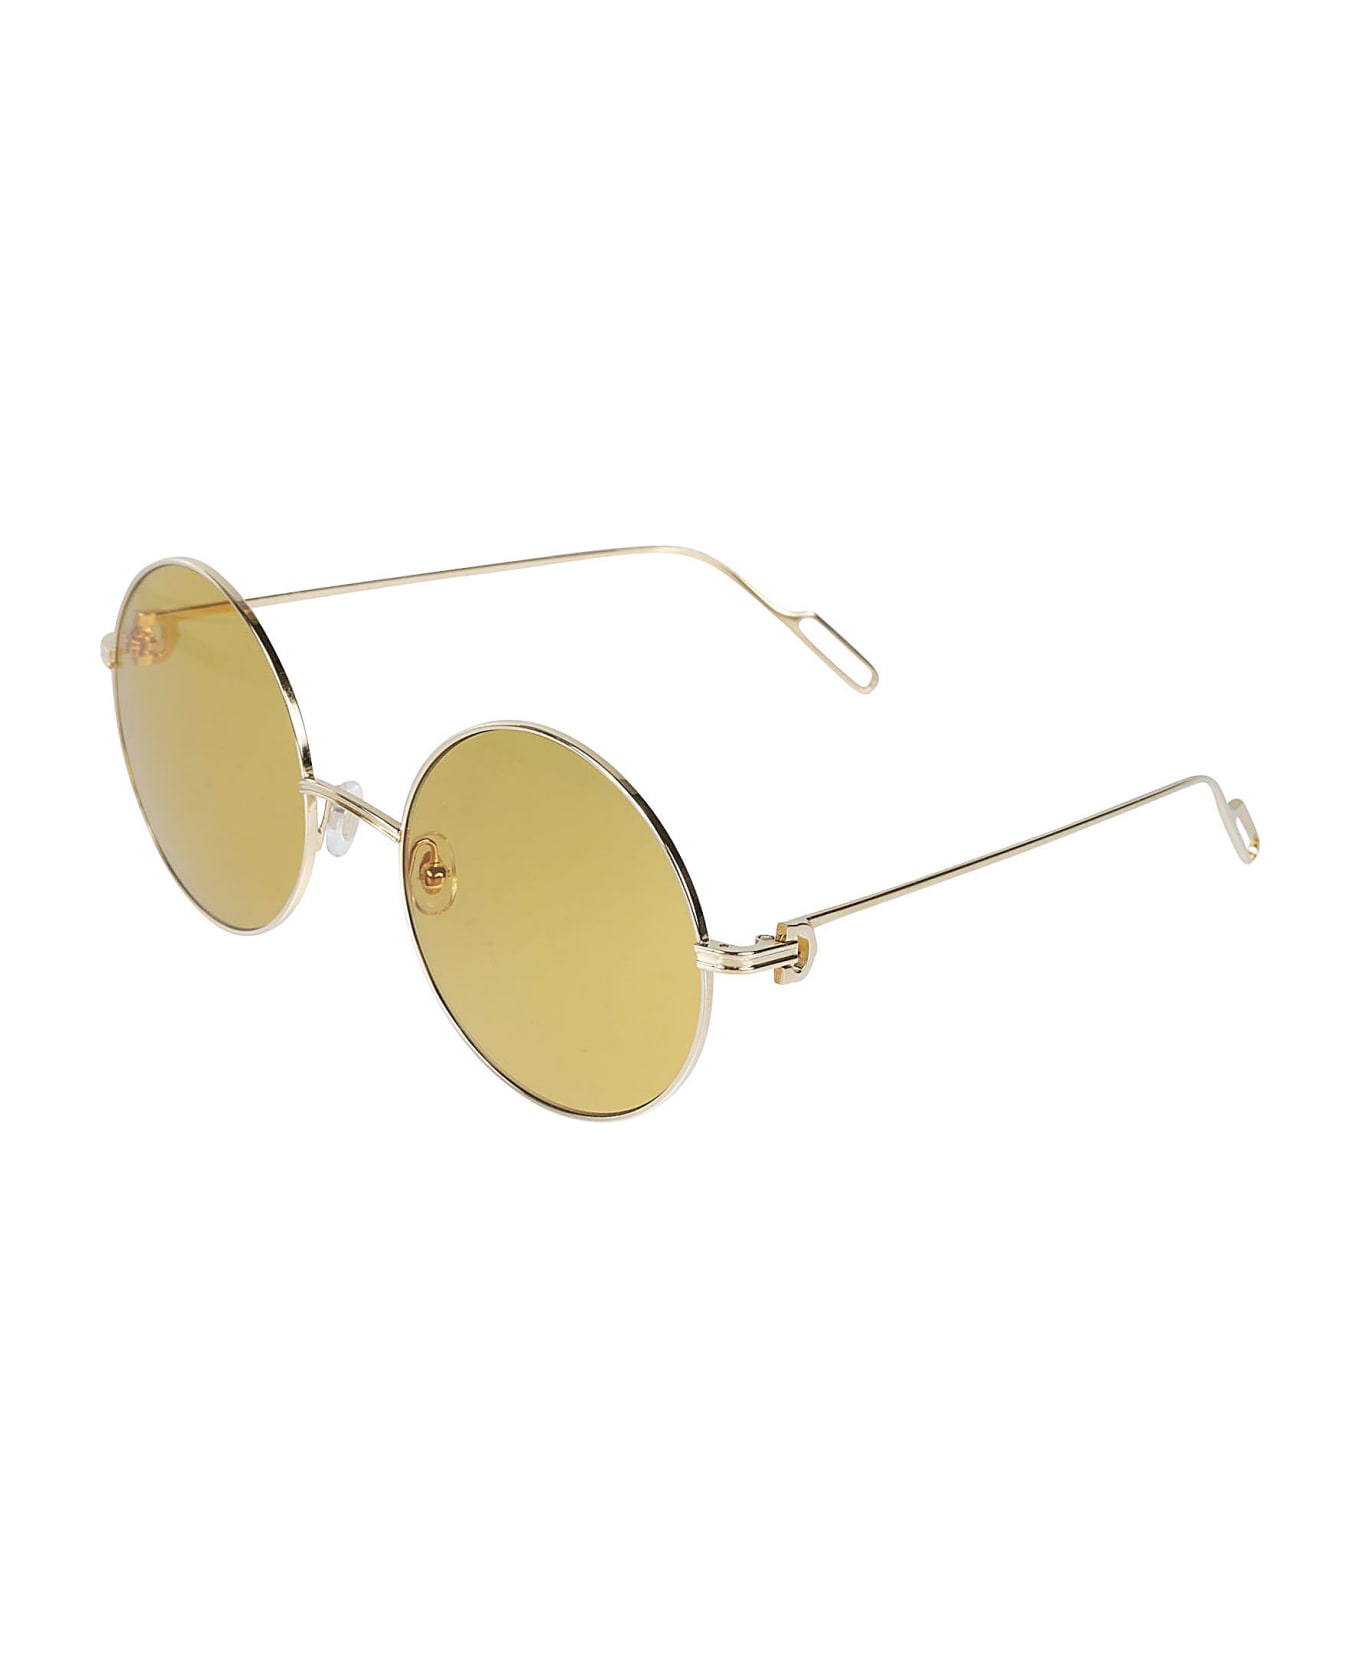 Cartier Eyewear Round Classic Sunglasses - 004 gold gold yellow